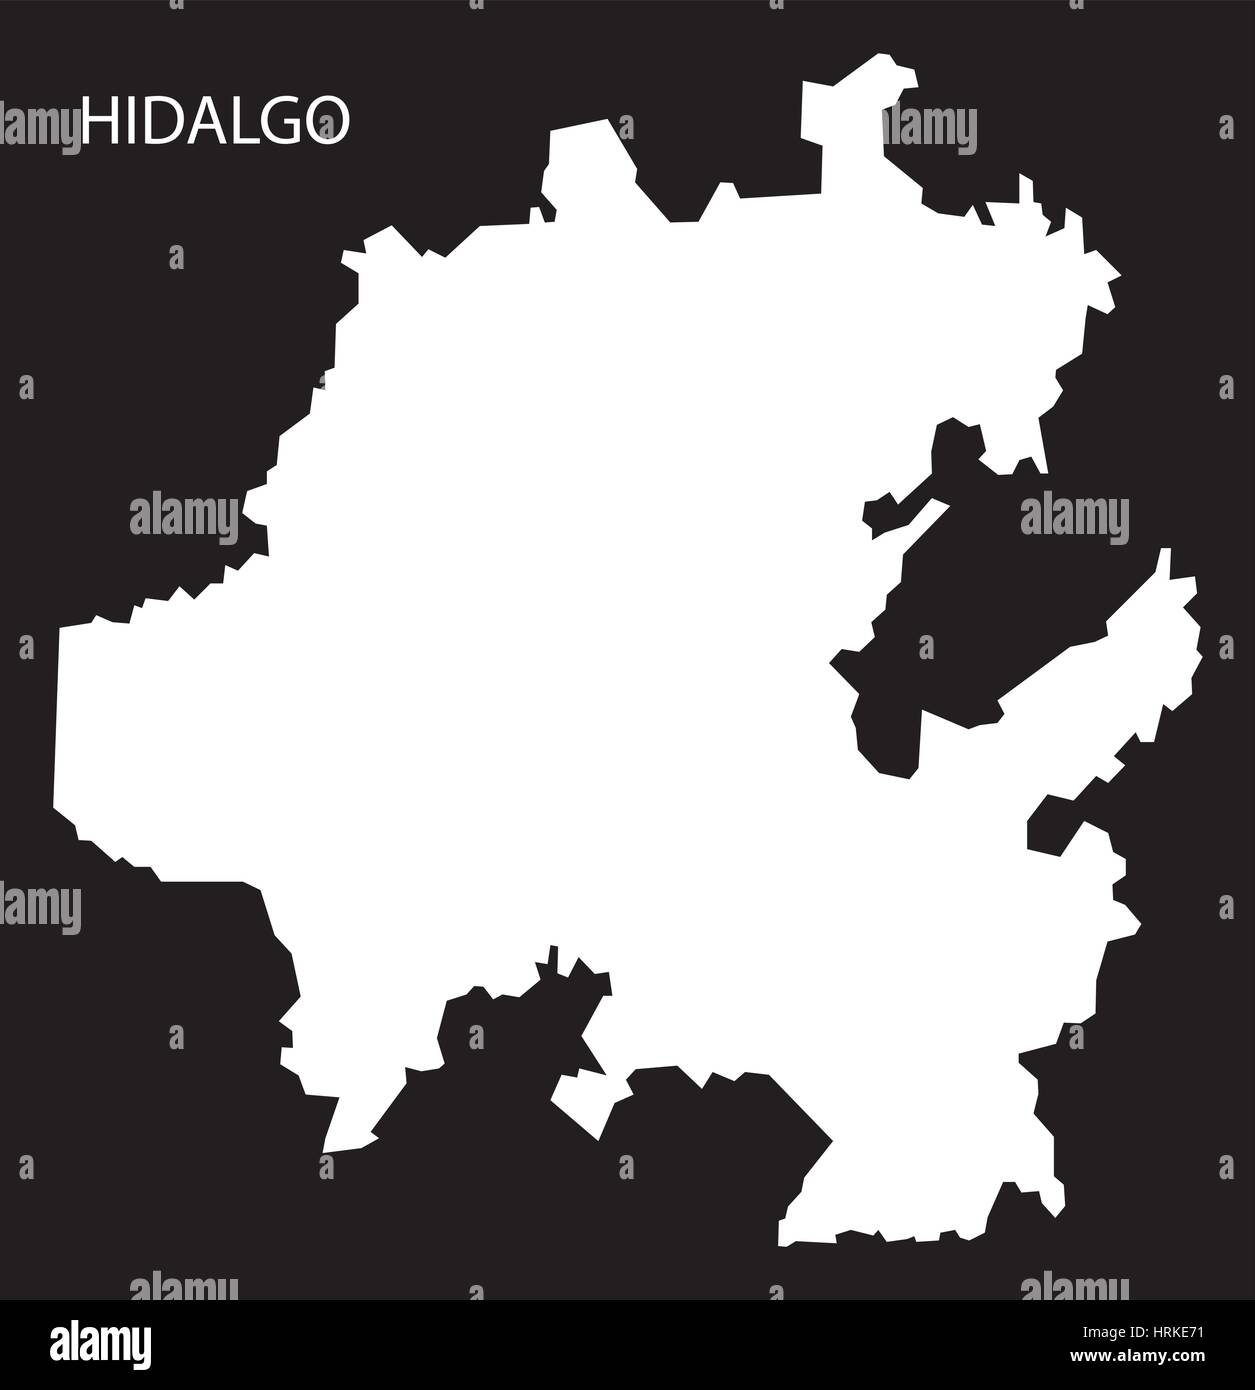 Hidalgo Mexico Map black inverted silhouette Stock Vector